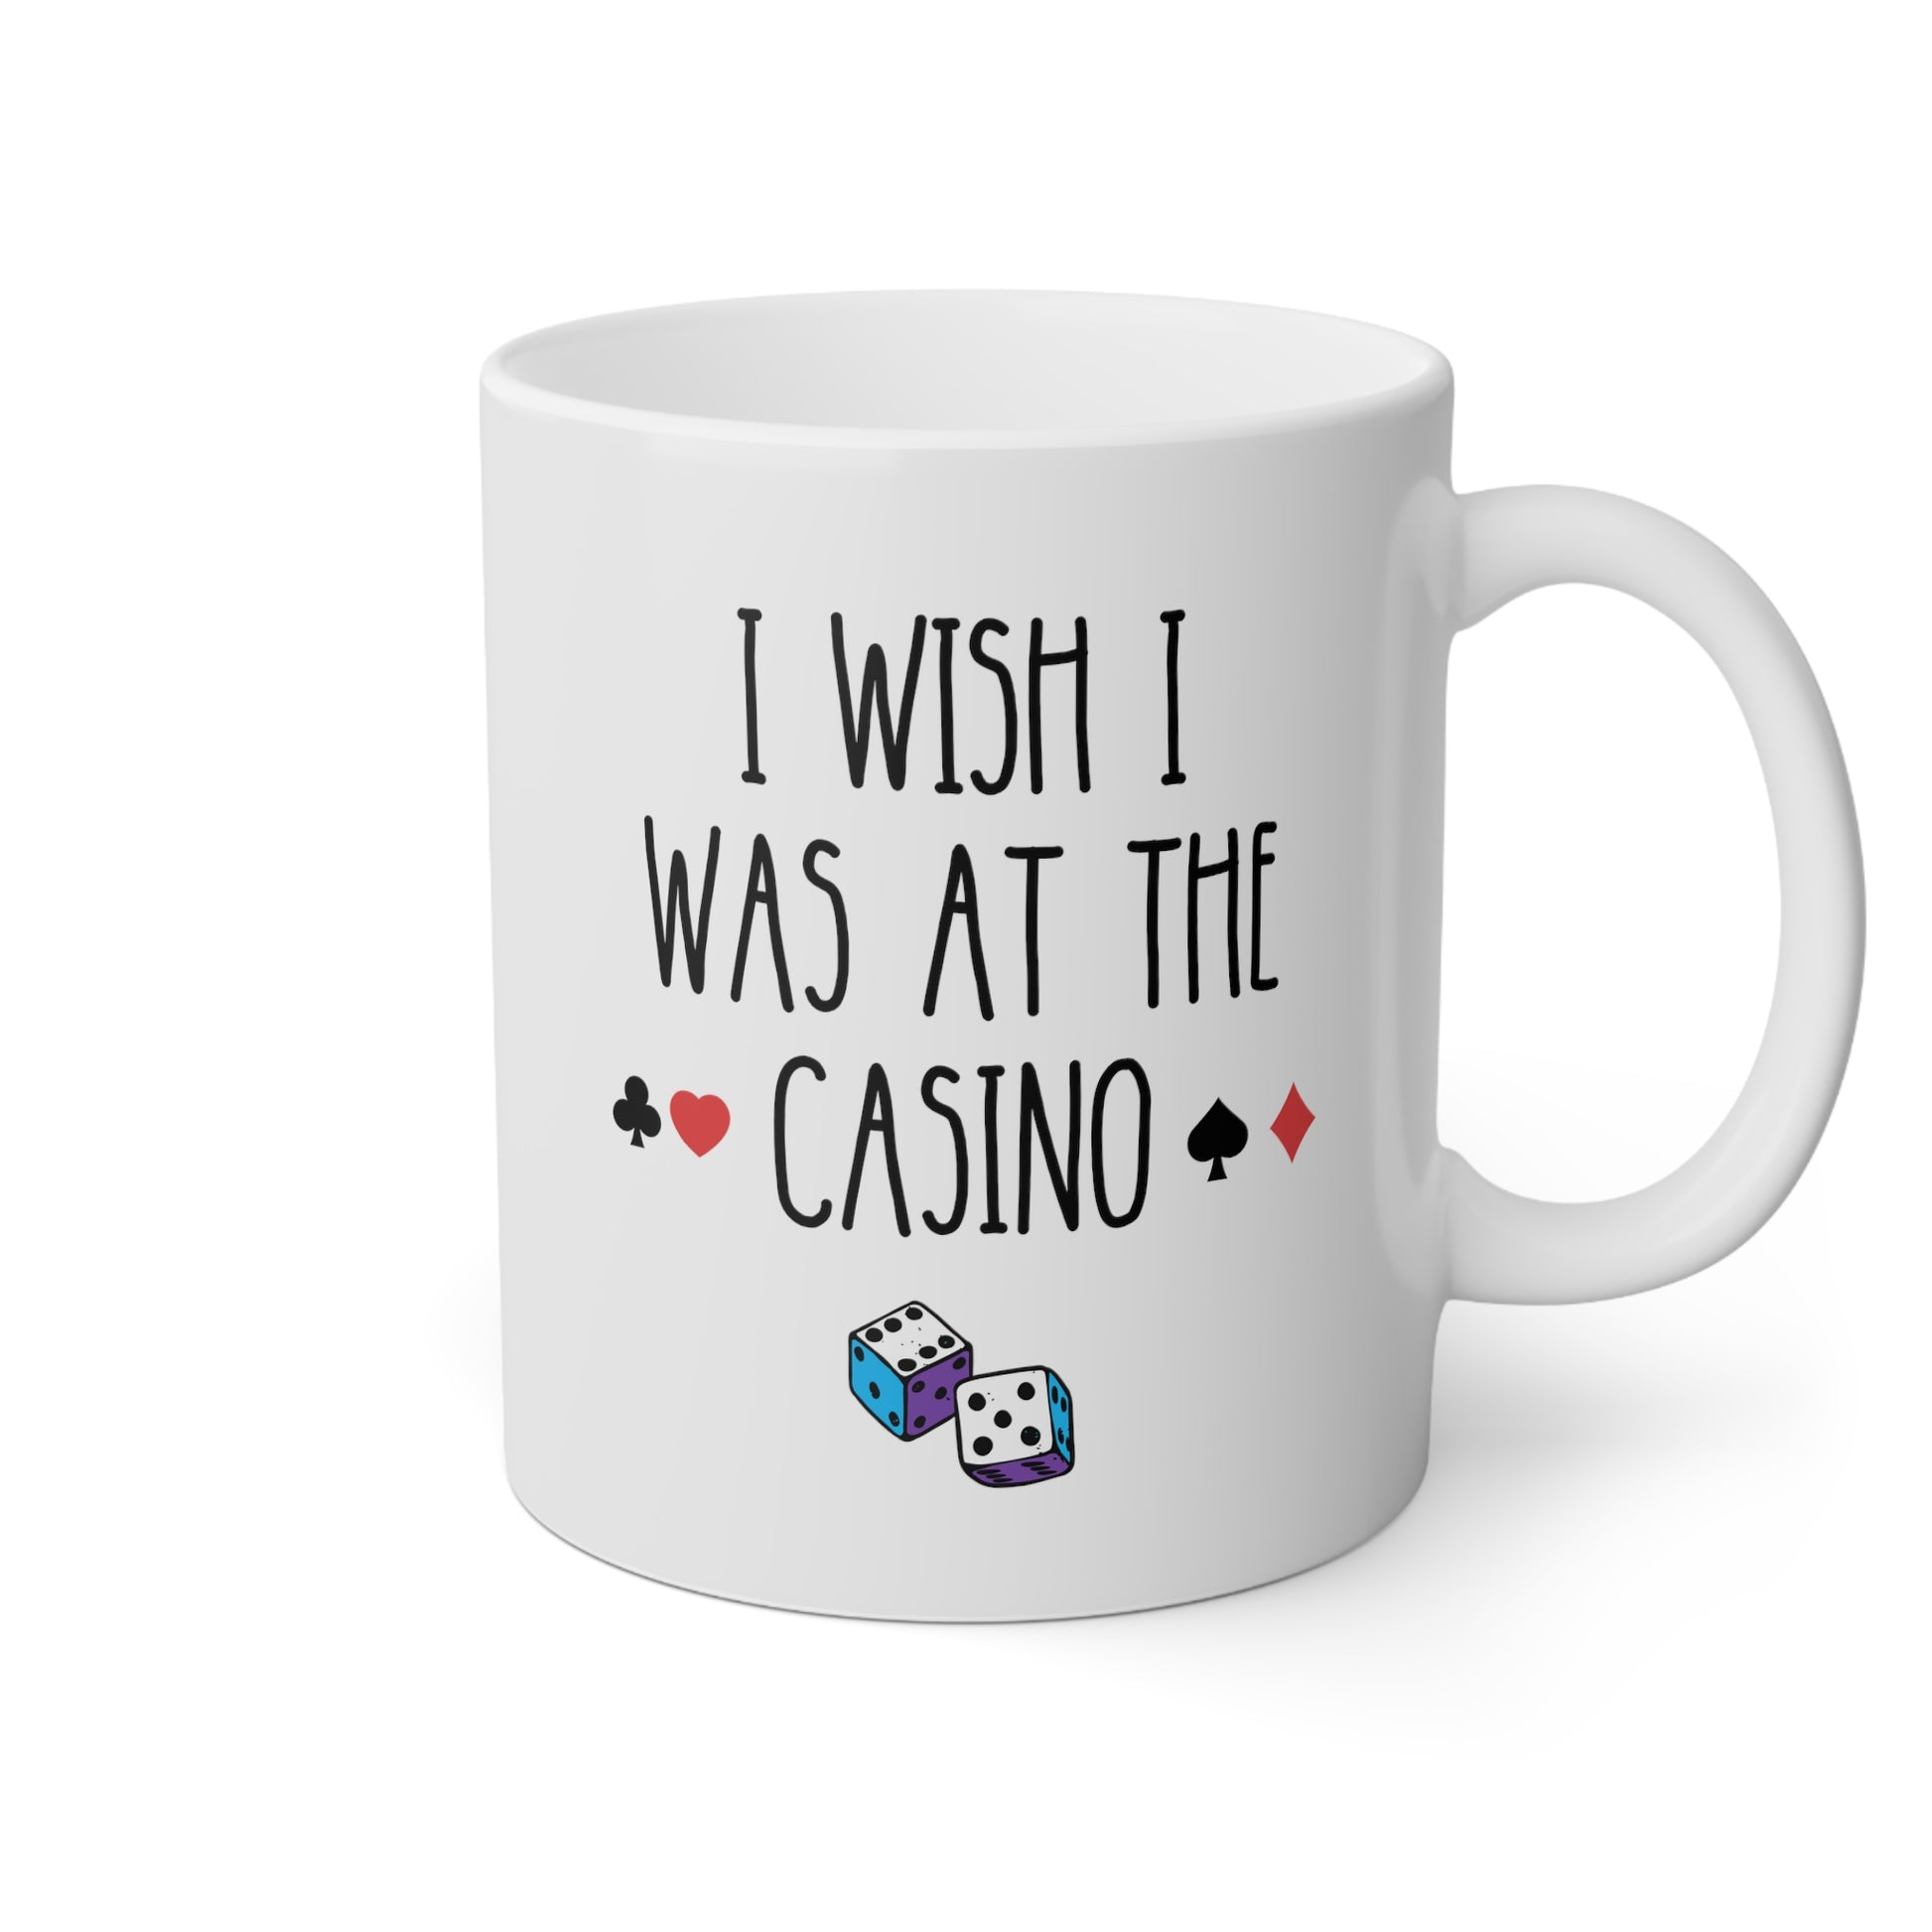 I Wish I Was At The Casino 11oz white funny large coffee mug gift for poker player gambling lover slot blackjack cup waveywares wavey wares wavywares wavy wares